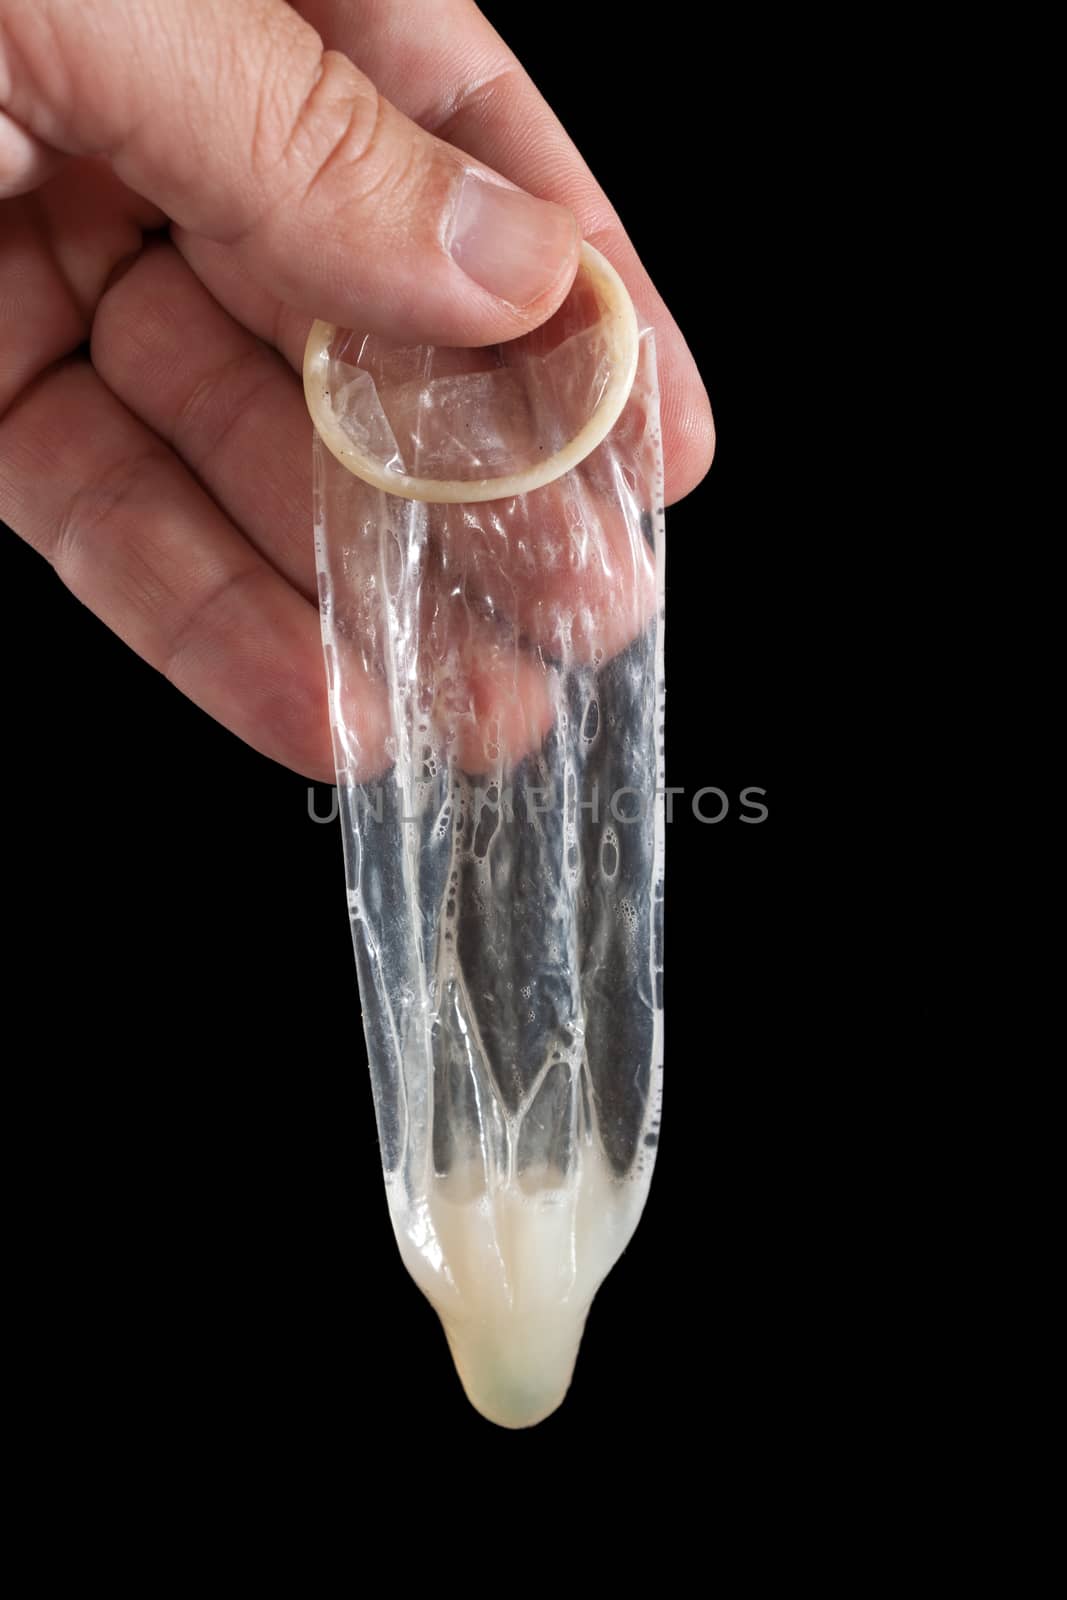 Used condom with sperm by Portokalis